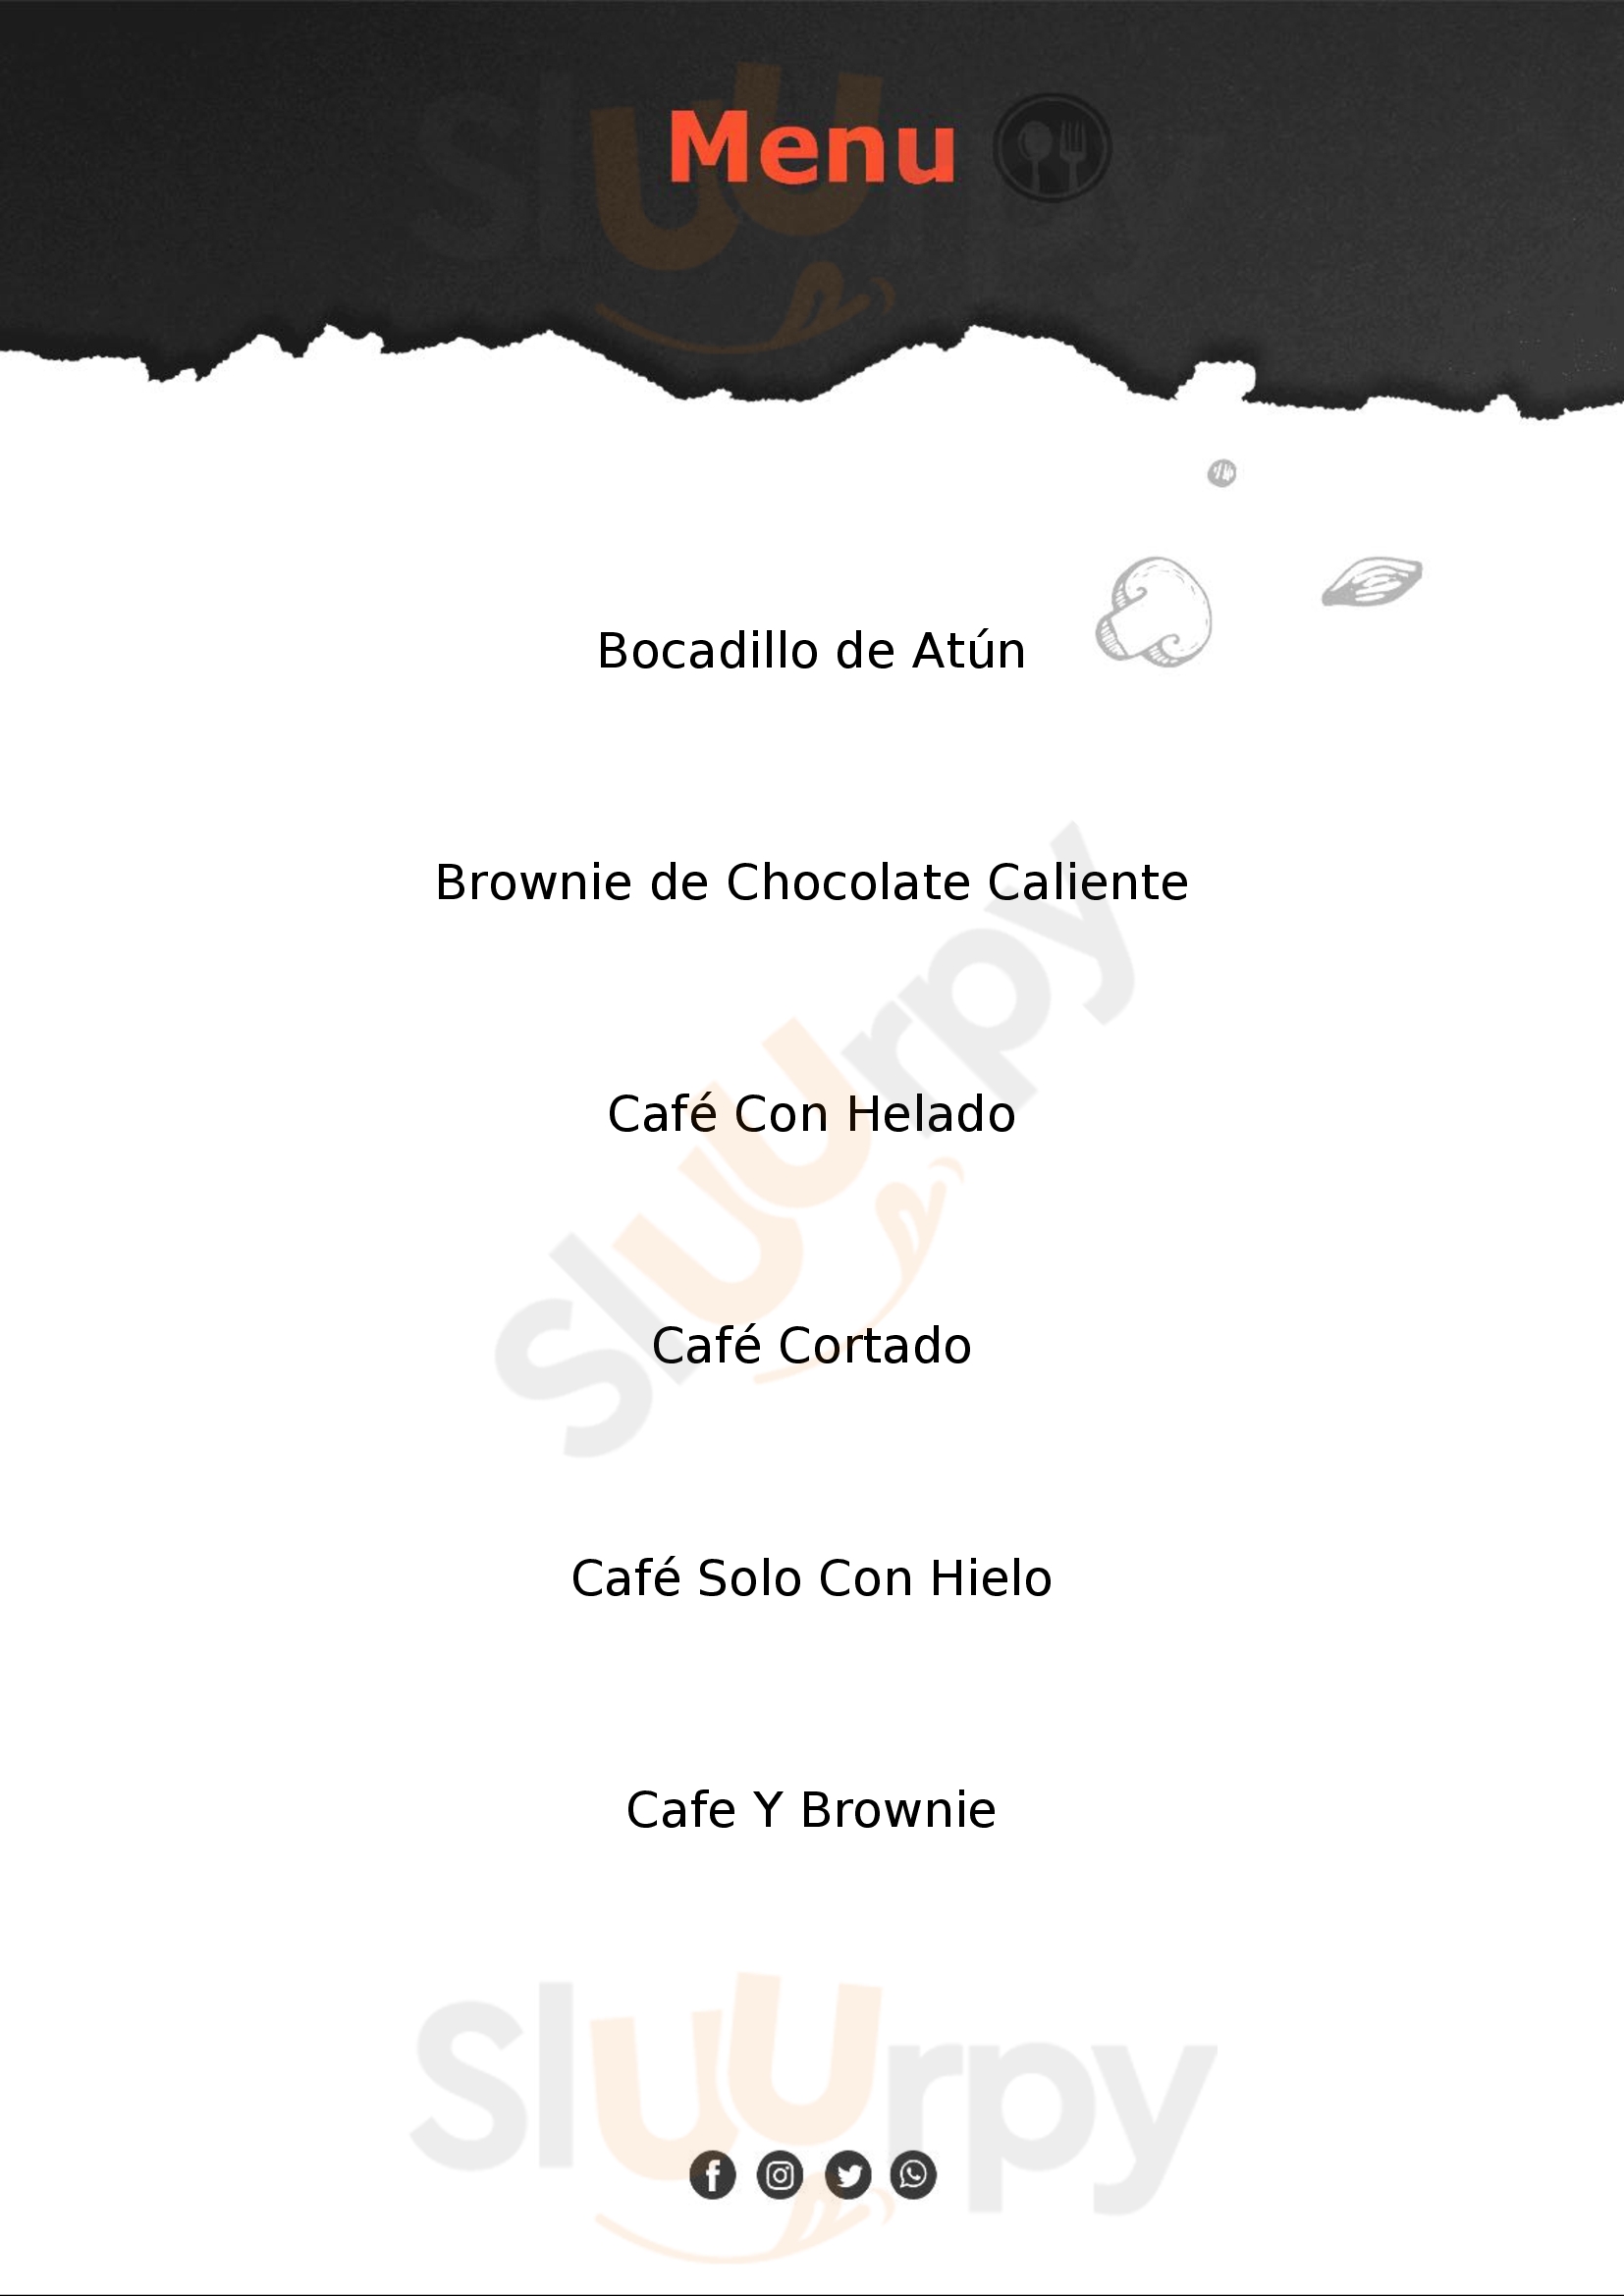 Cafe Y Te Bilbao Menu - 1